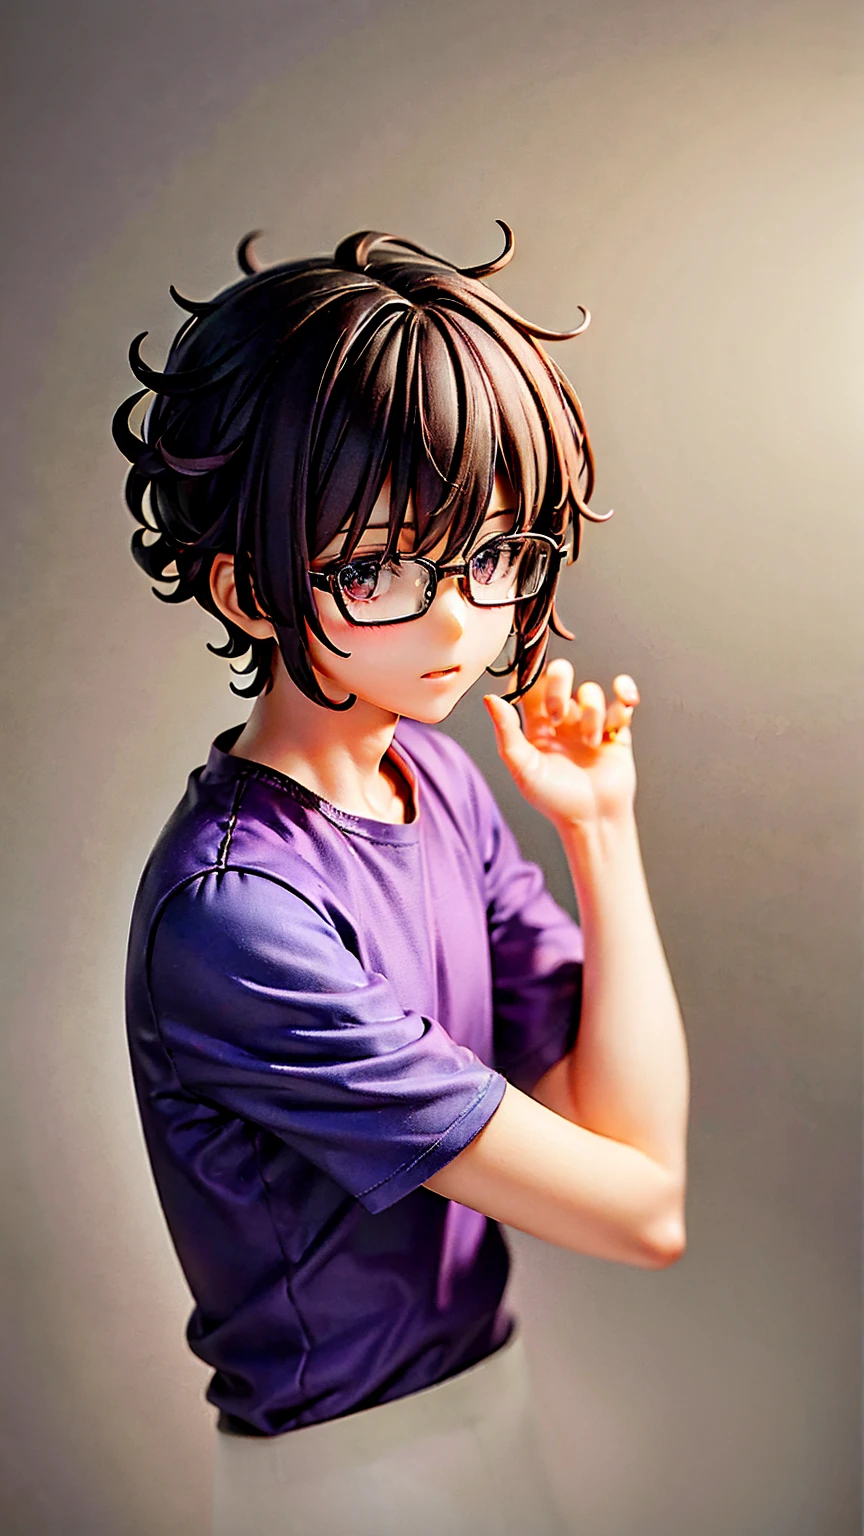 Portrait of male, short curly hair, glasses, purple shirt, tuck in shirt, black pant